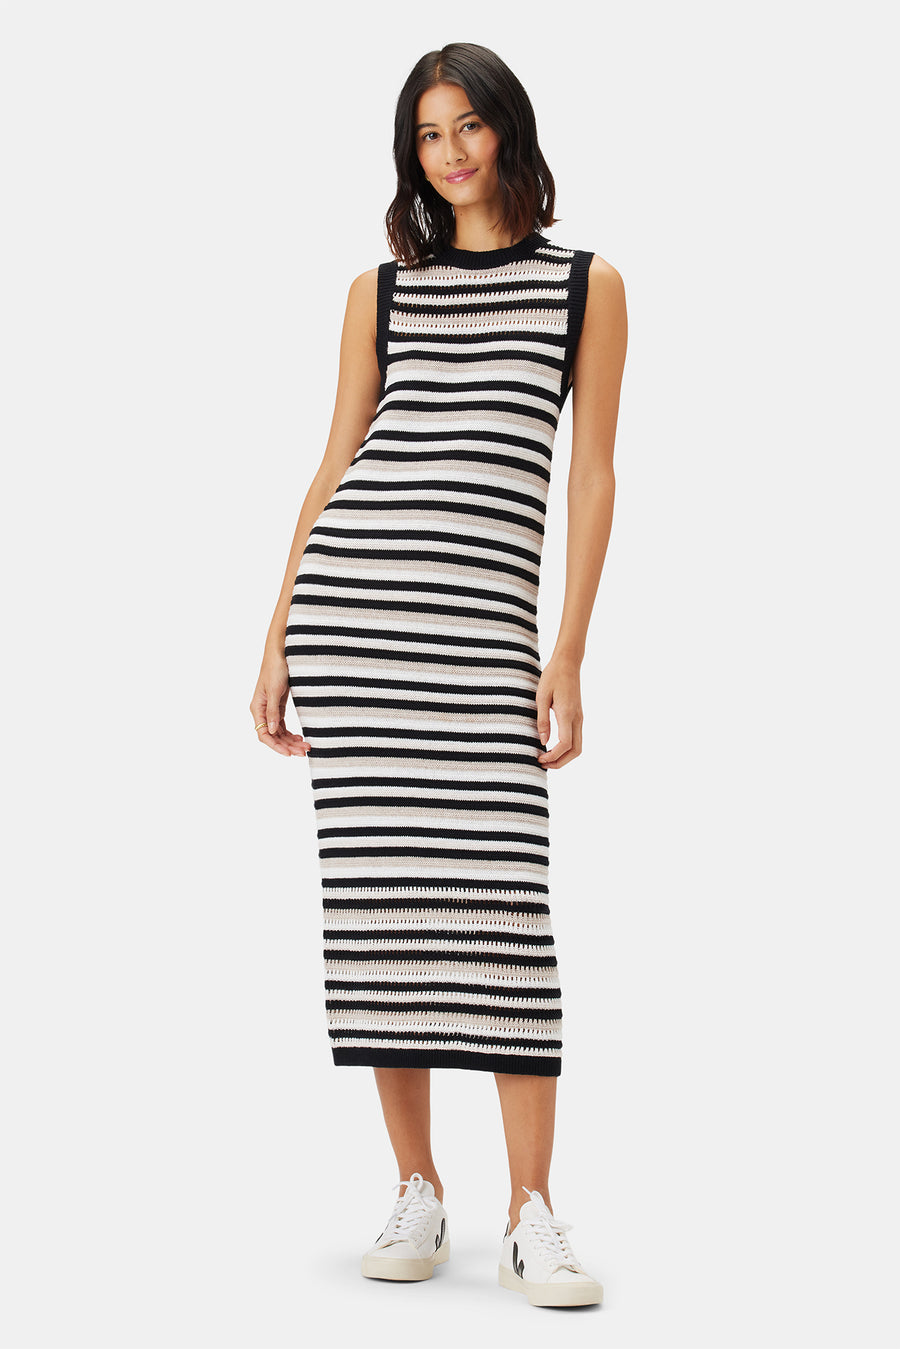 Louise Crochet Dress - Black White Multi Stripe